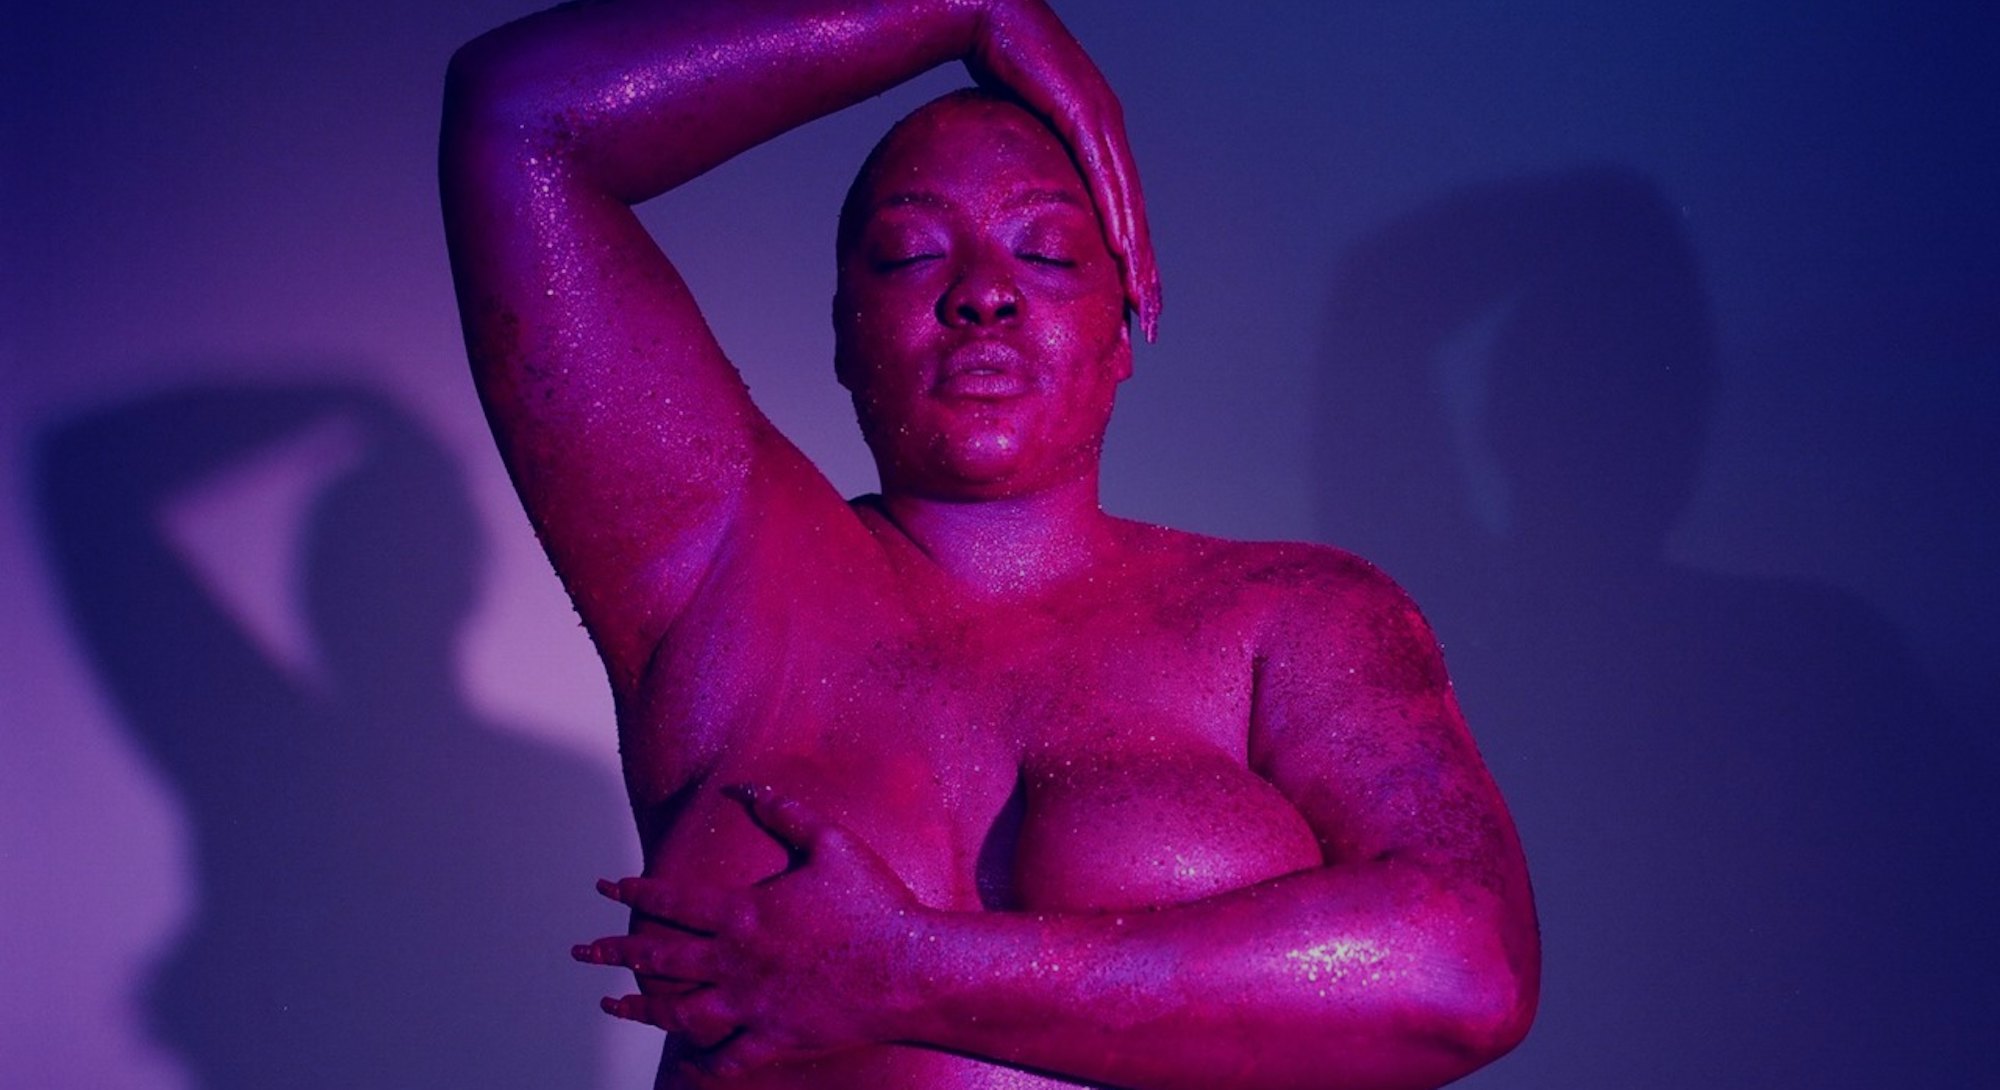 Fat, black femme art photography